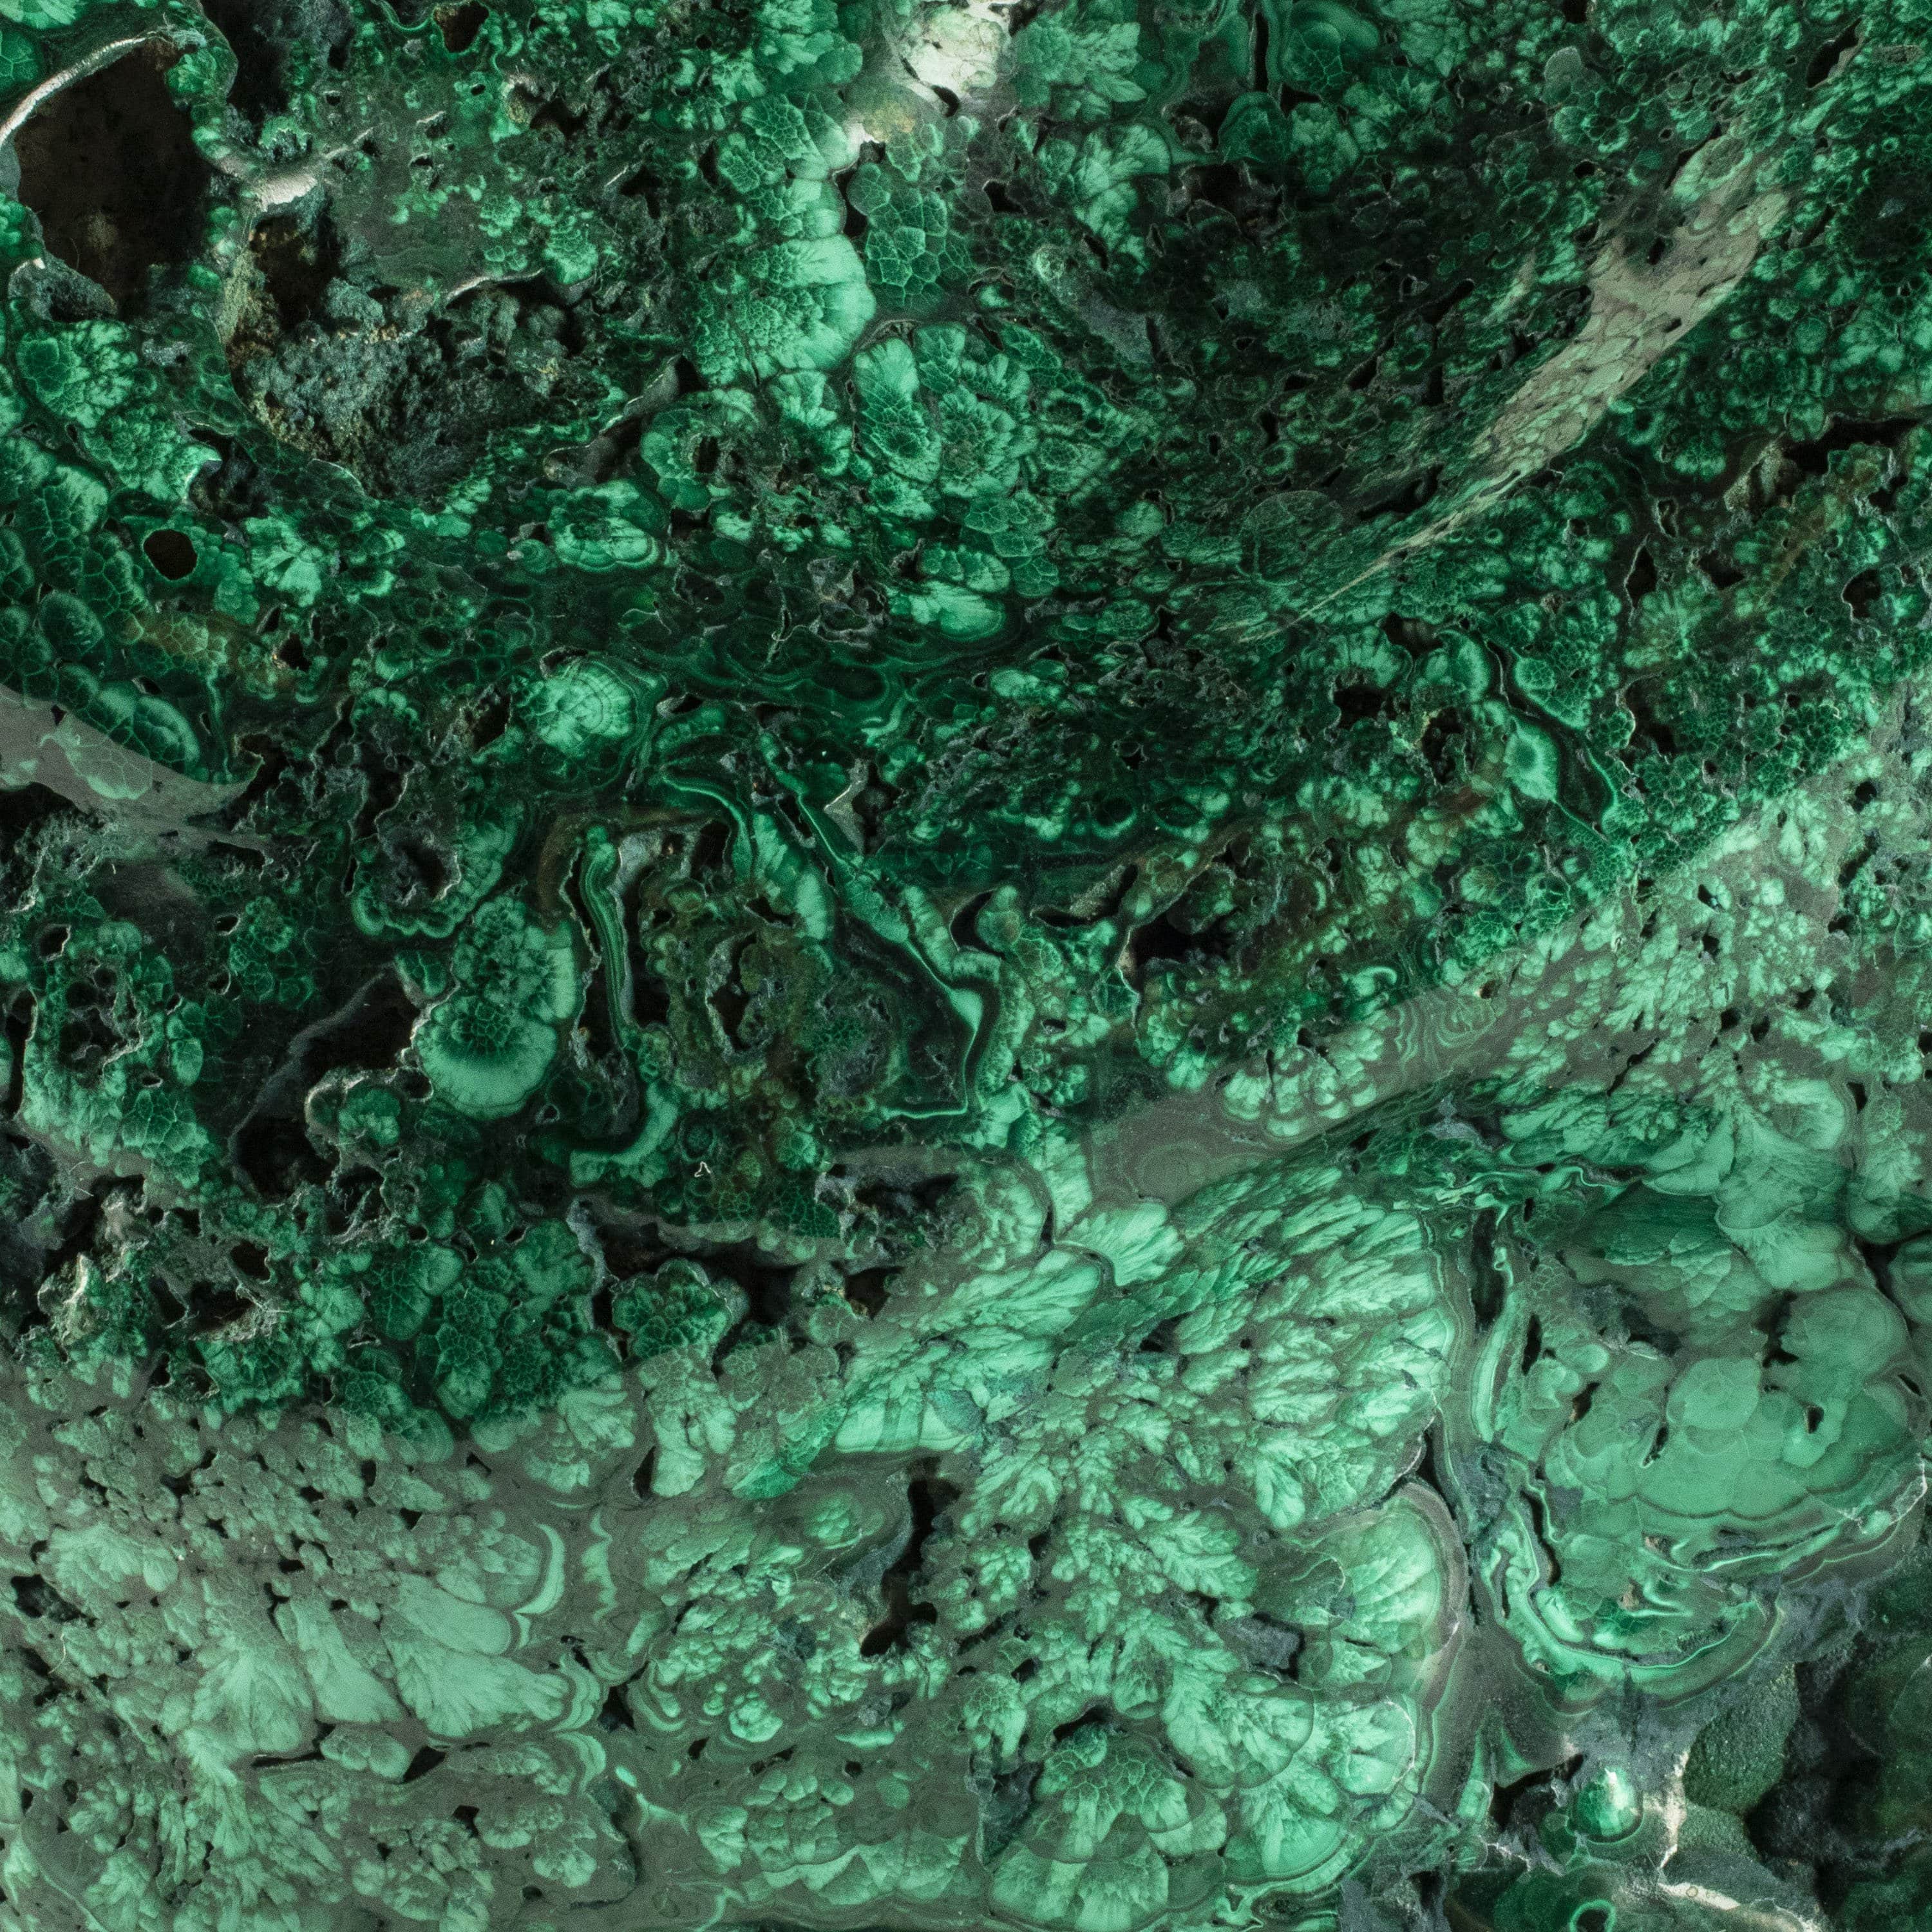 Kalifano Malachite Rare Natural Green Malachite Polished Freeform Specimen from Congo - 4.1 kg / 9 lbs MA3000.001